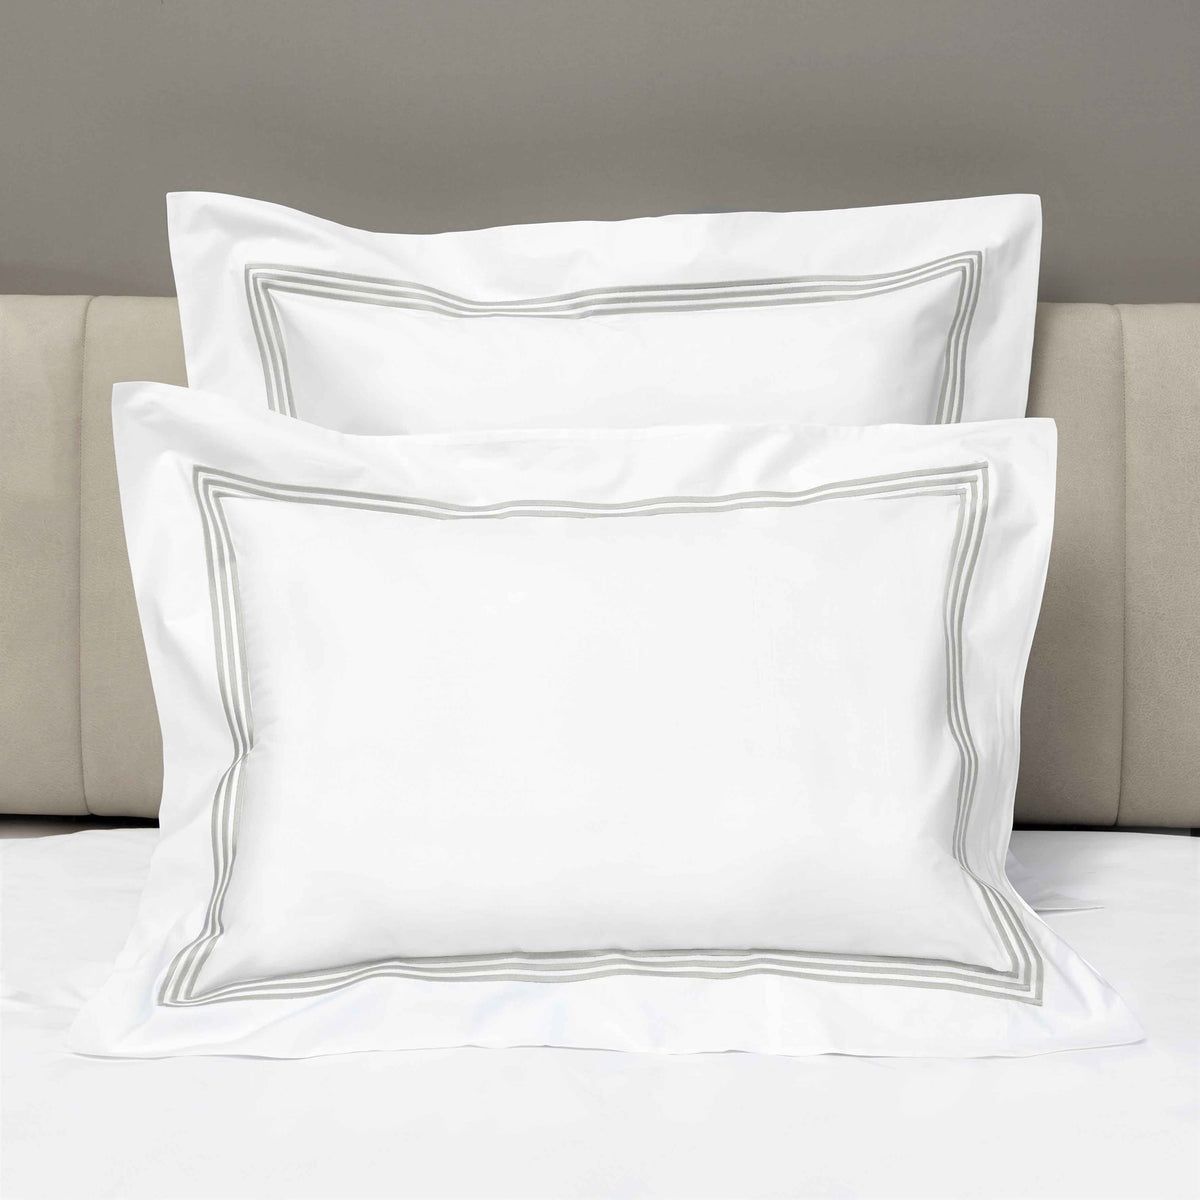 Shams of Signoria Platinum Percale Bedding in White/Pearl Color